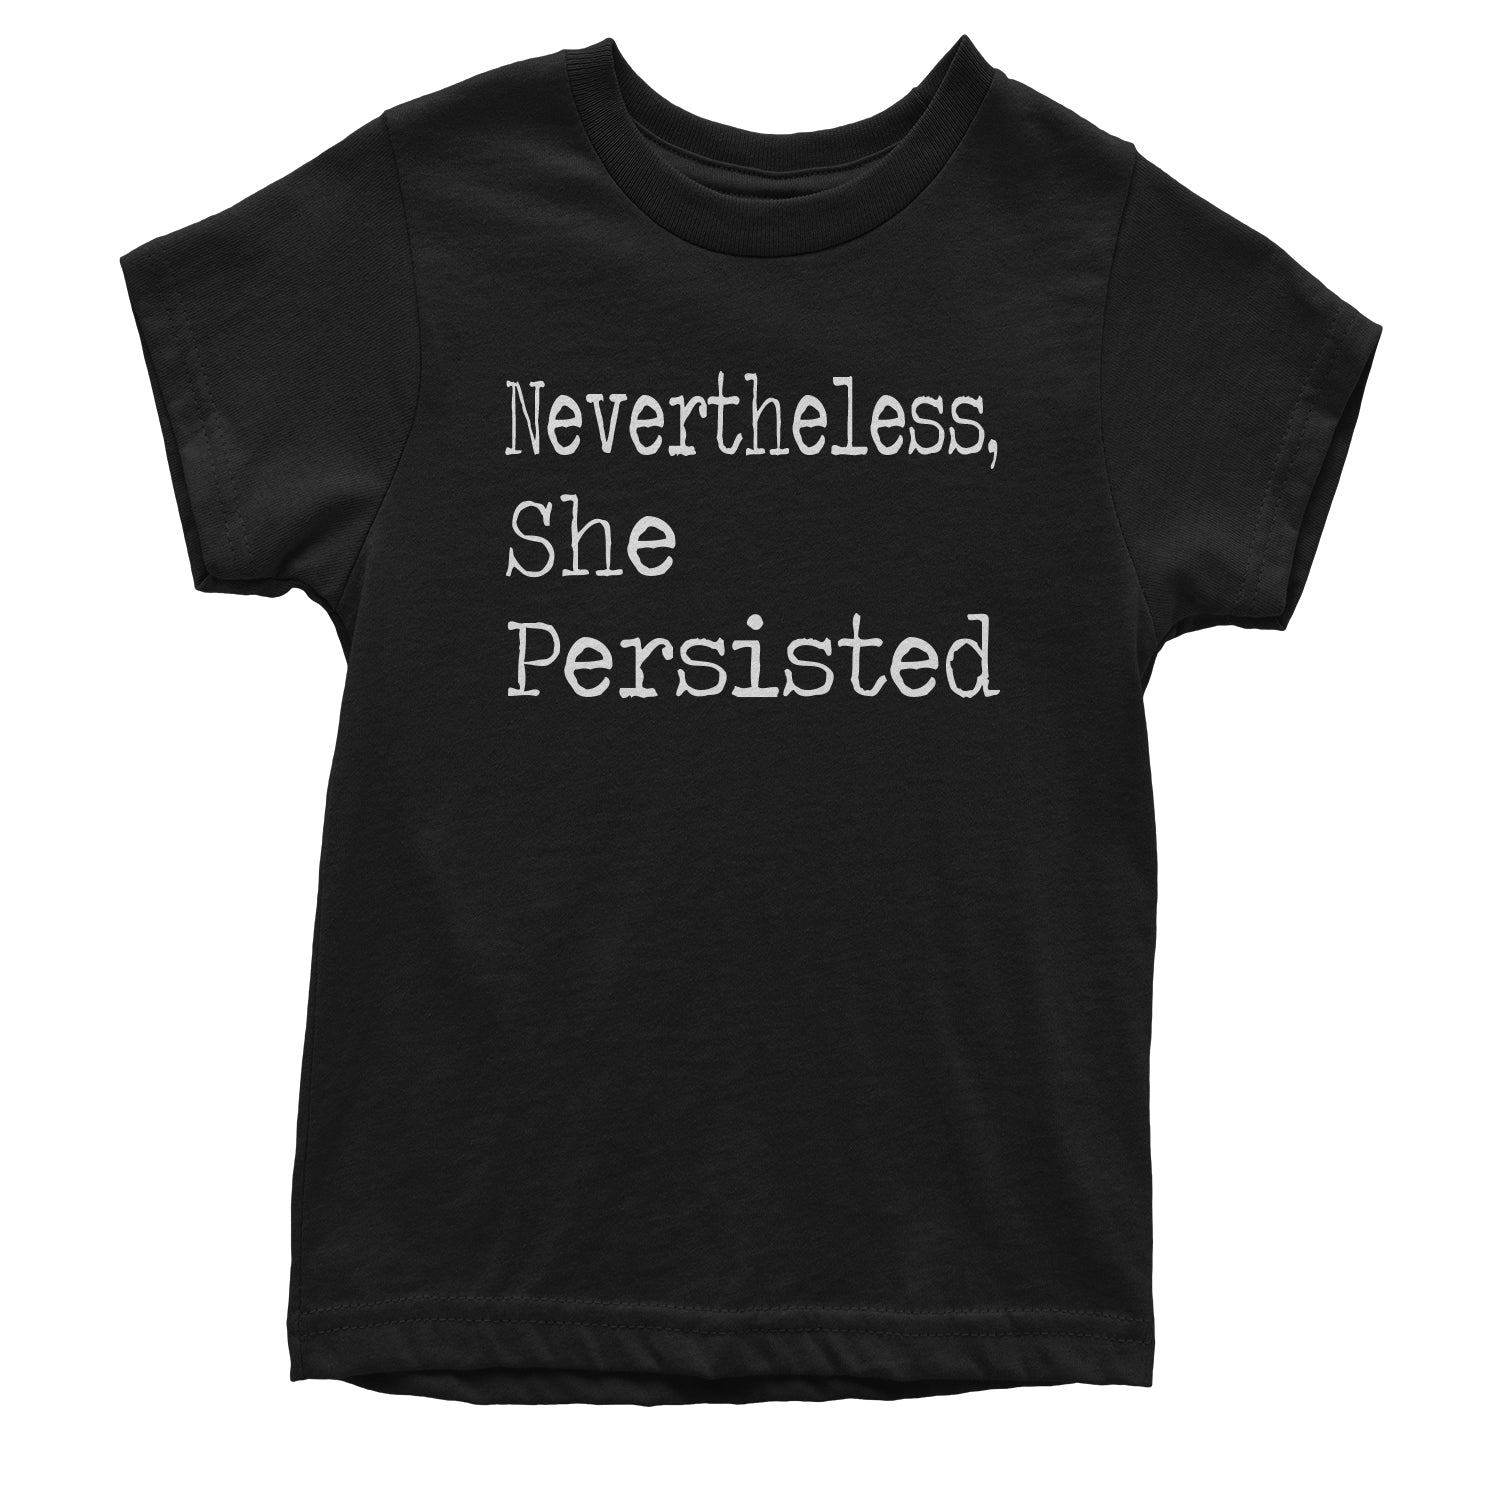 Nevertheless, She Persisted Youth T-shirt 2020, feminism, feminist, kamala, letlizspeak, mamala, mcconnell, mitch, momala, mommala by Expression Tees